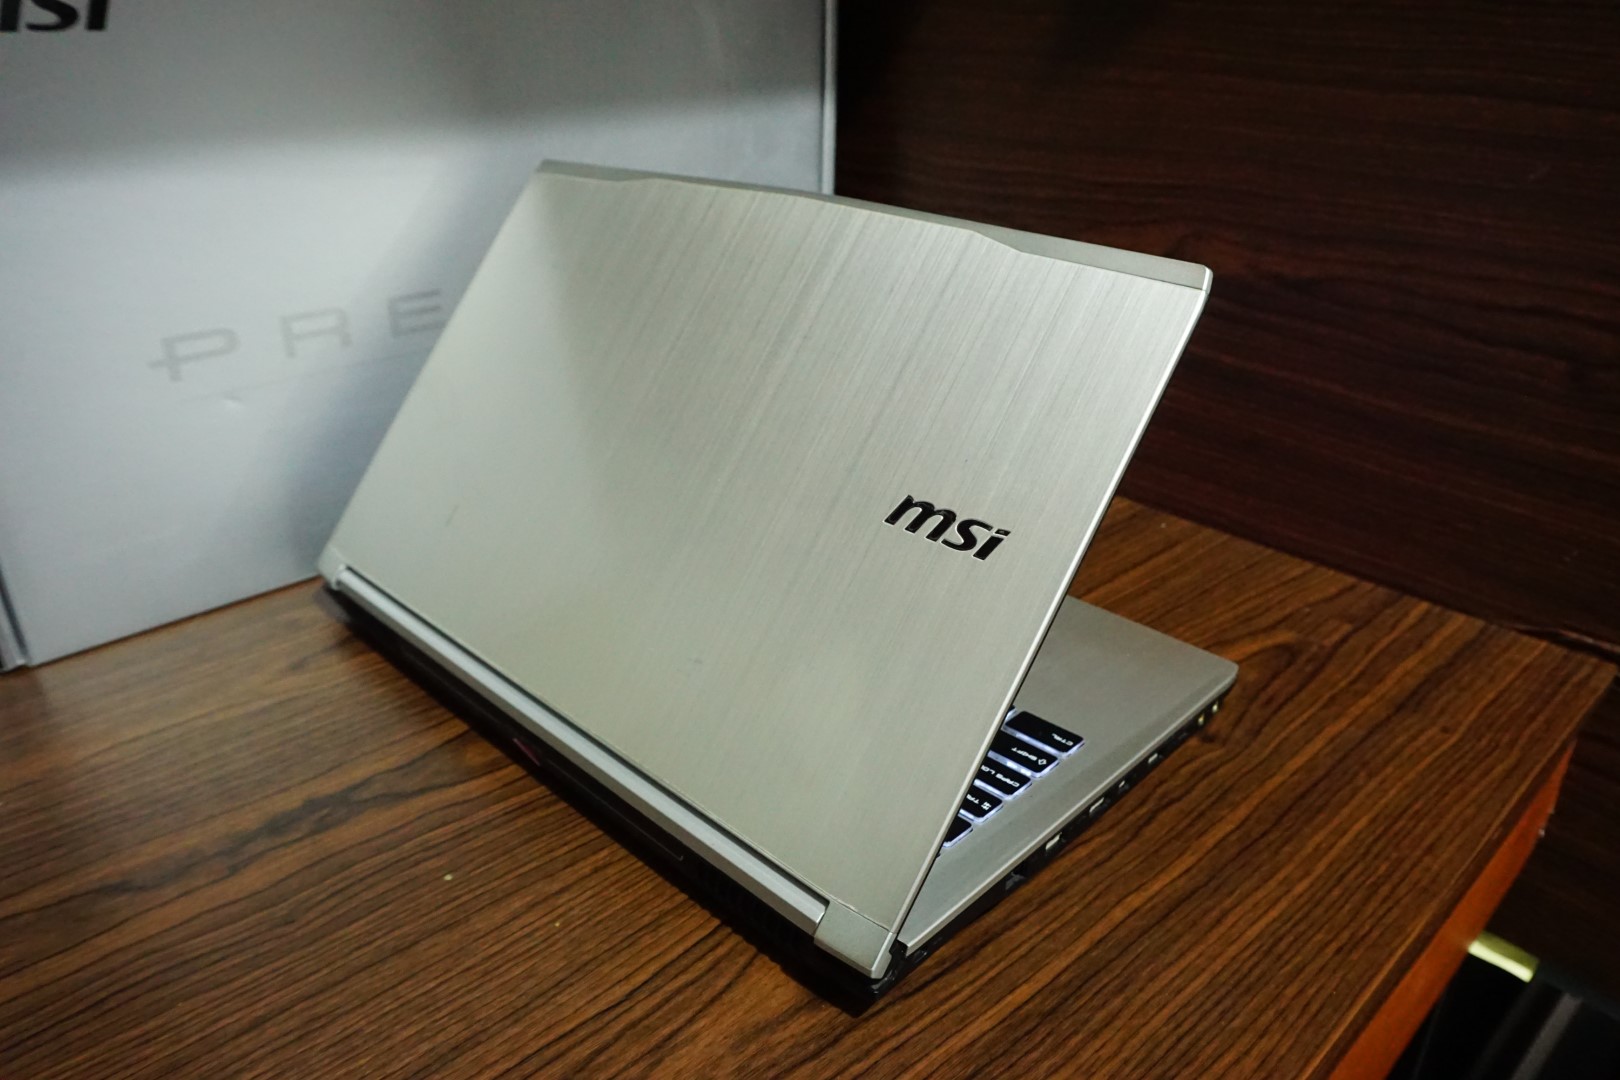 Jual Laptop MSI Prestige PE60 6QE Fullset